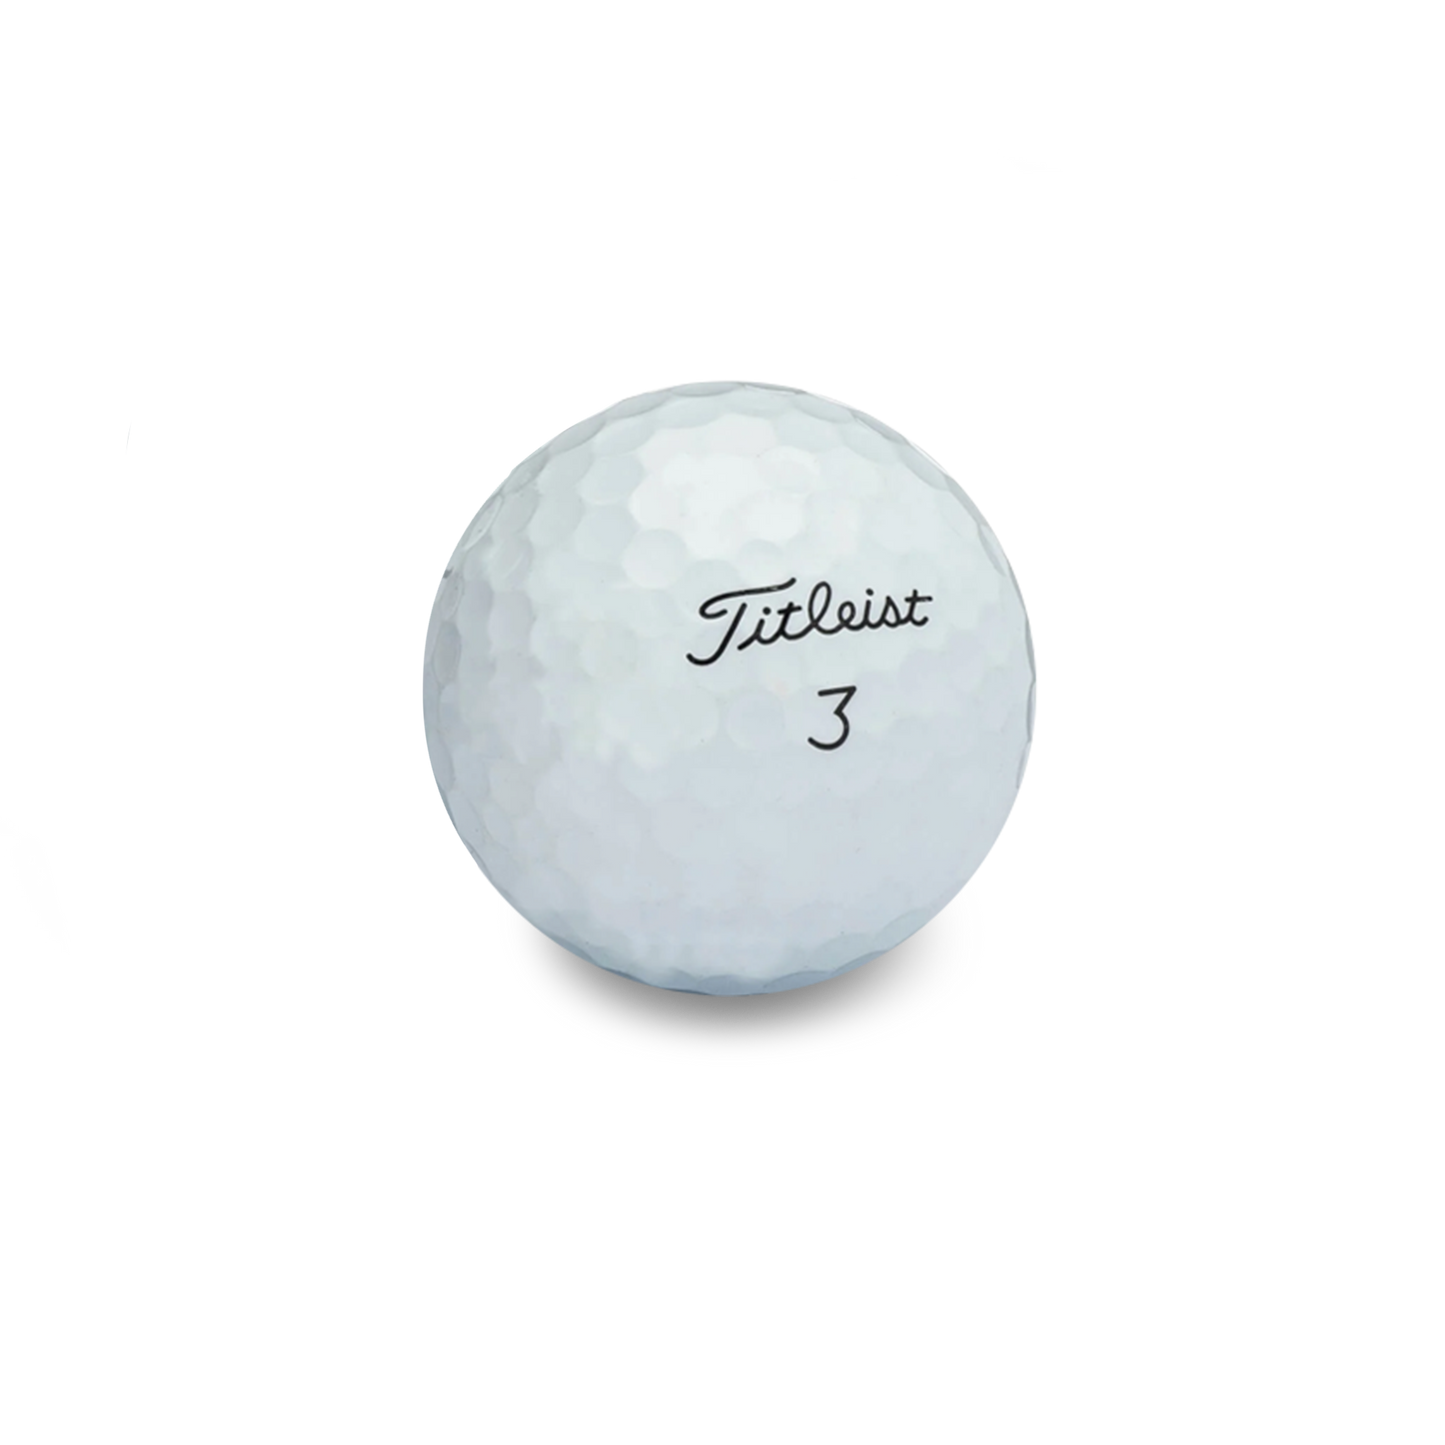 Used Titleist AVX Golf Balls - 1 Dozen